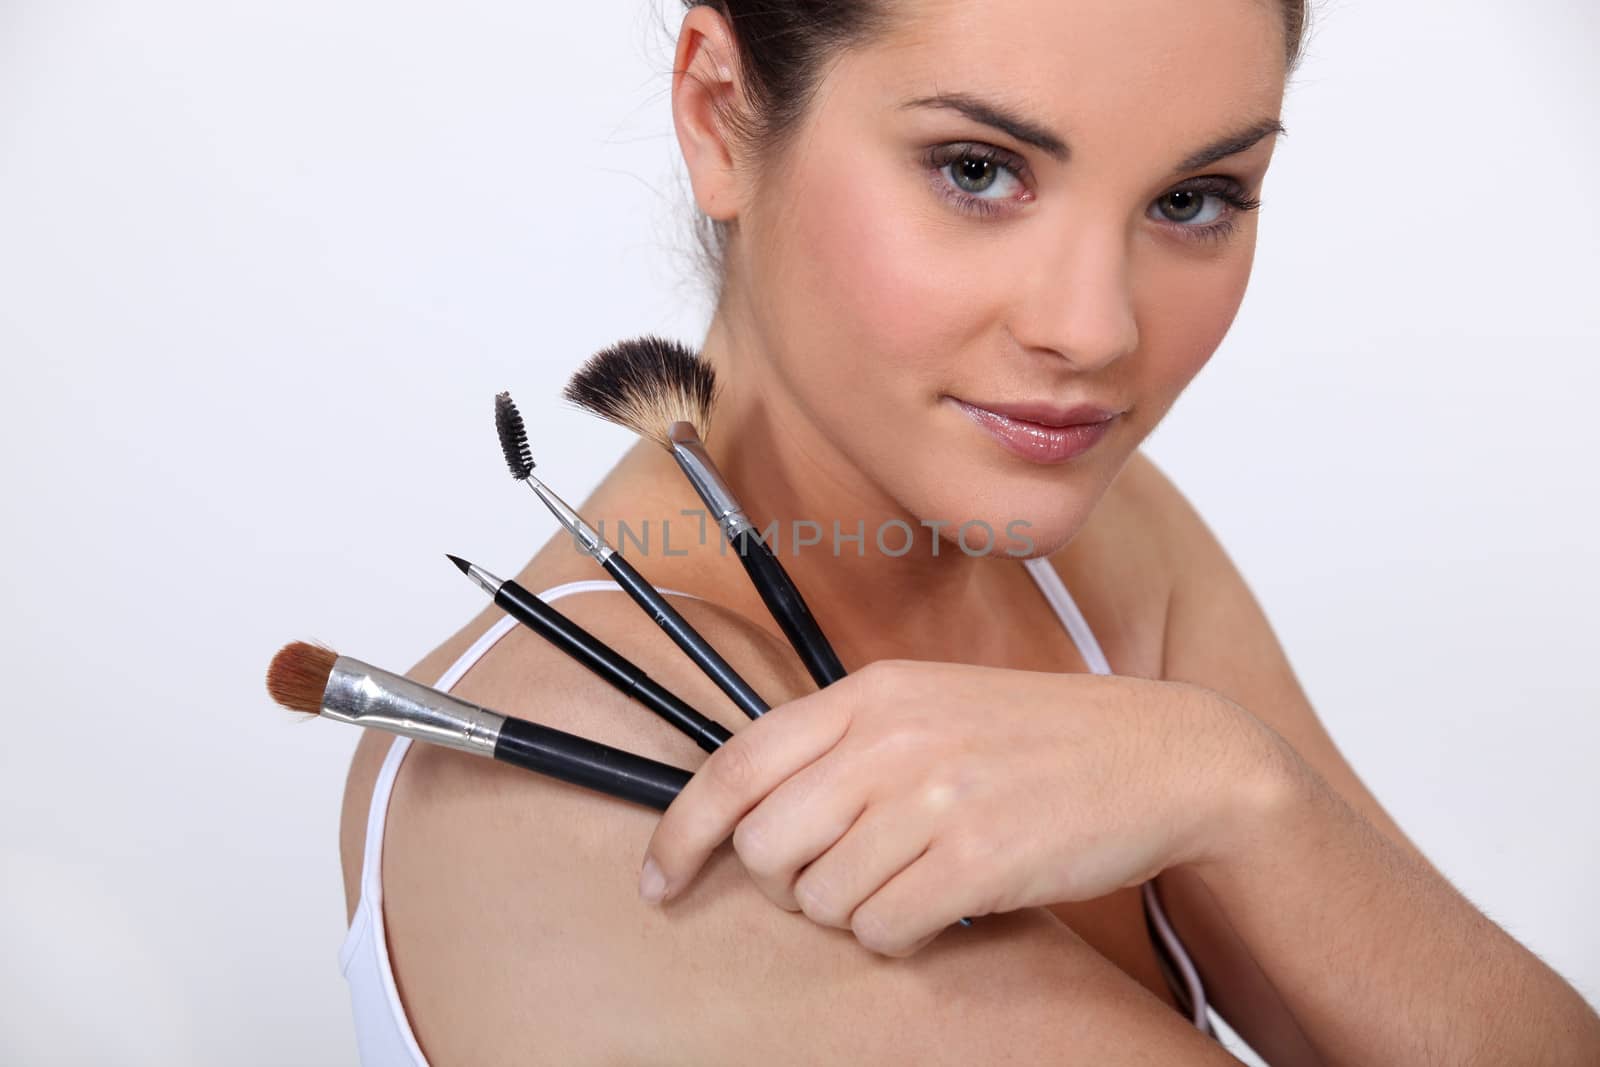 beautiful woman holding make up brushes